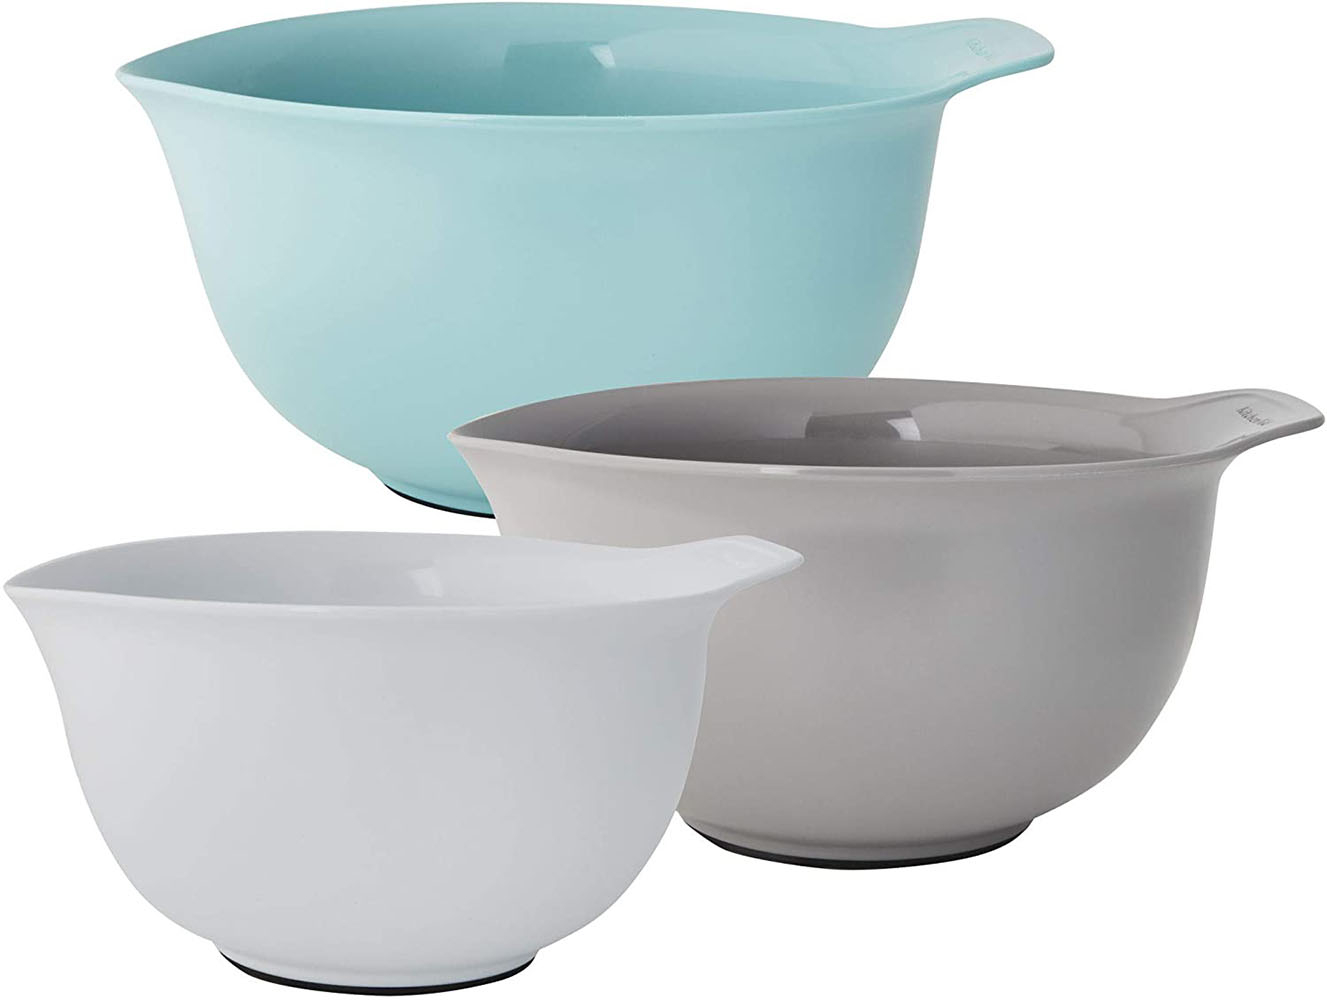 KitchenAid - 3-Piece Mixing Bowl Set - Aqua, Gray & White